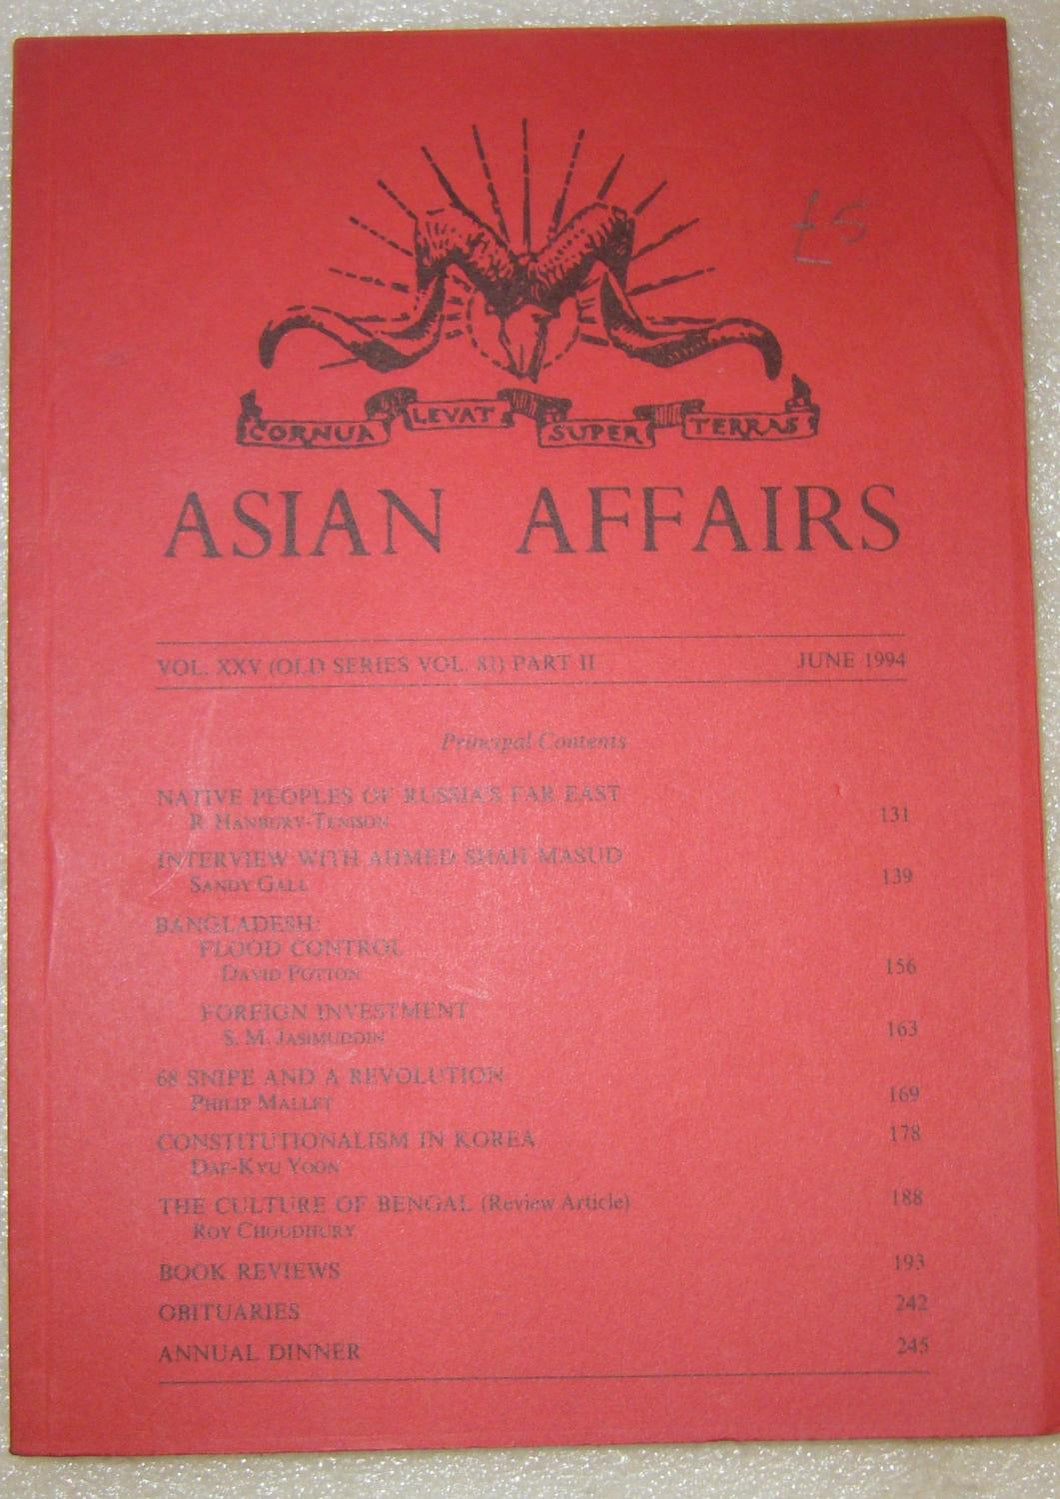 Asian Affairs, Vol XXV (Old Series Vol 81) Part II, June 1994